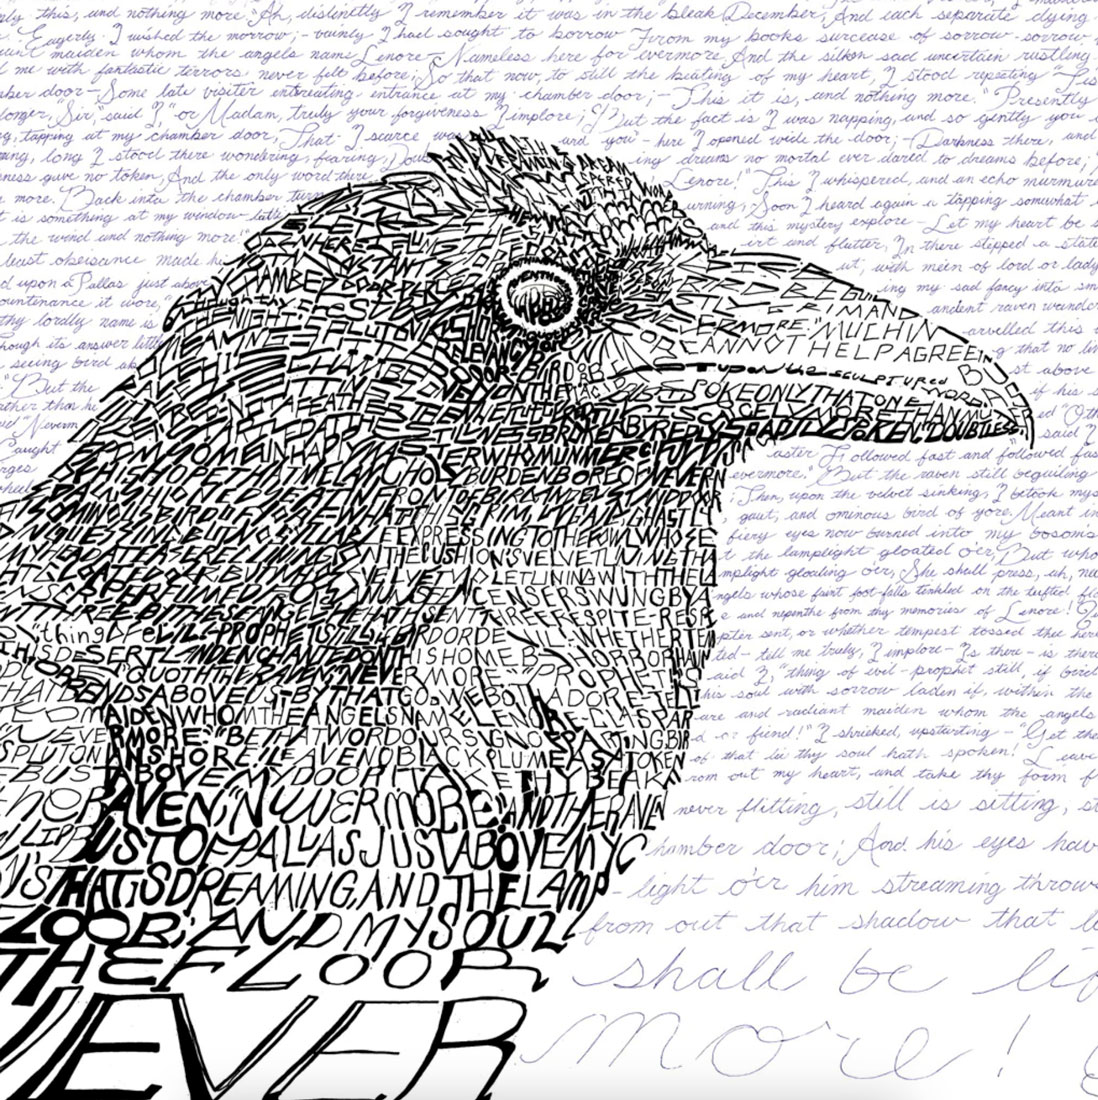 Raven by Edgar Allan Poe